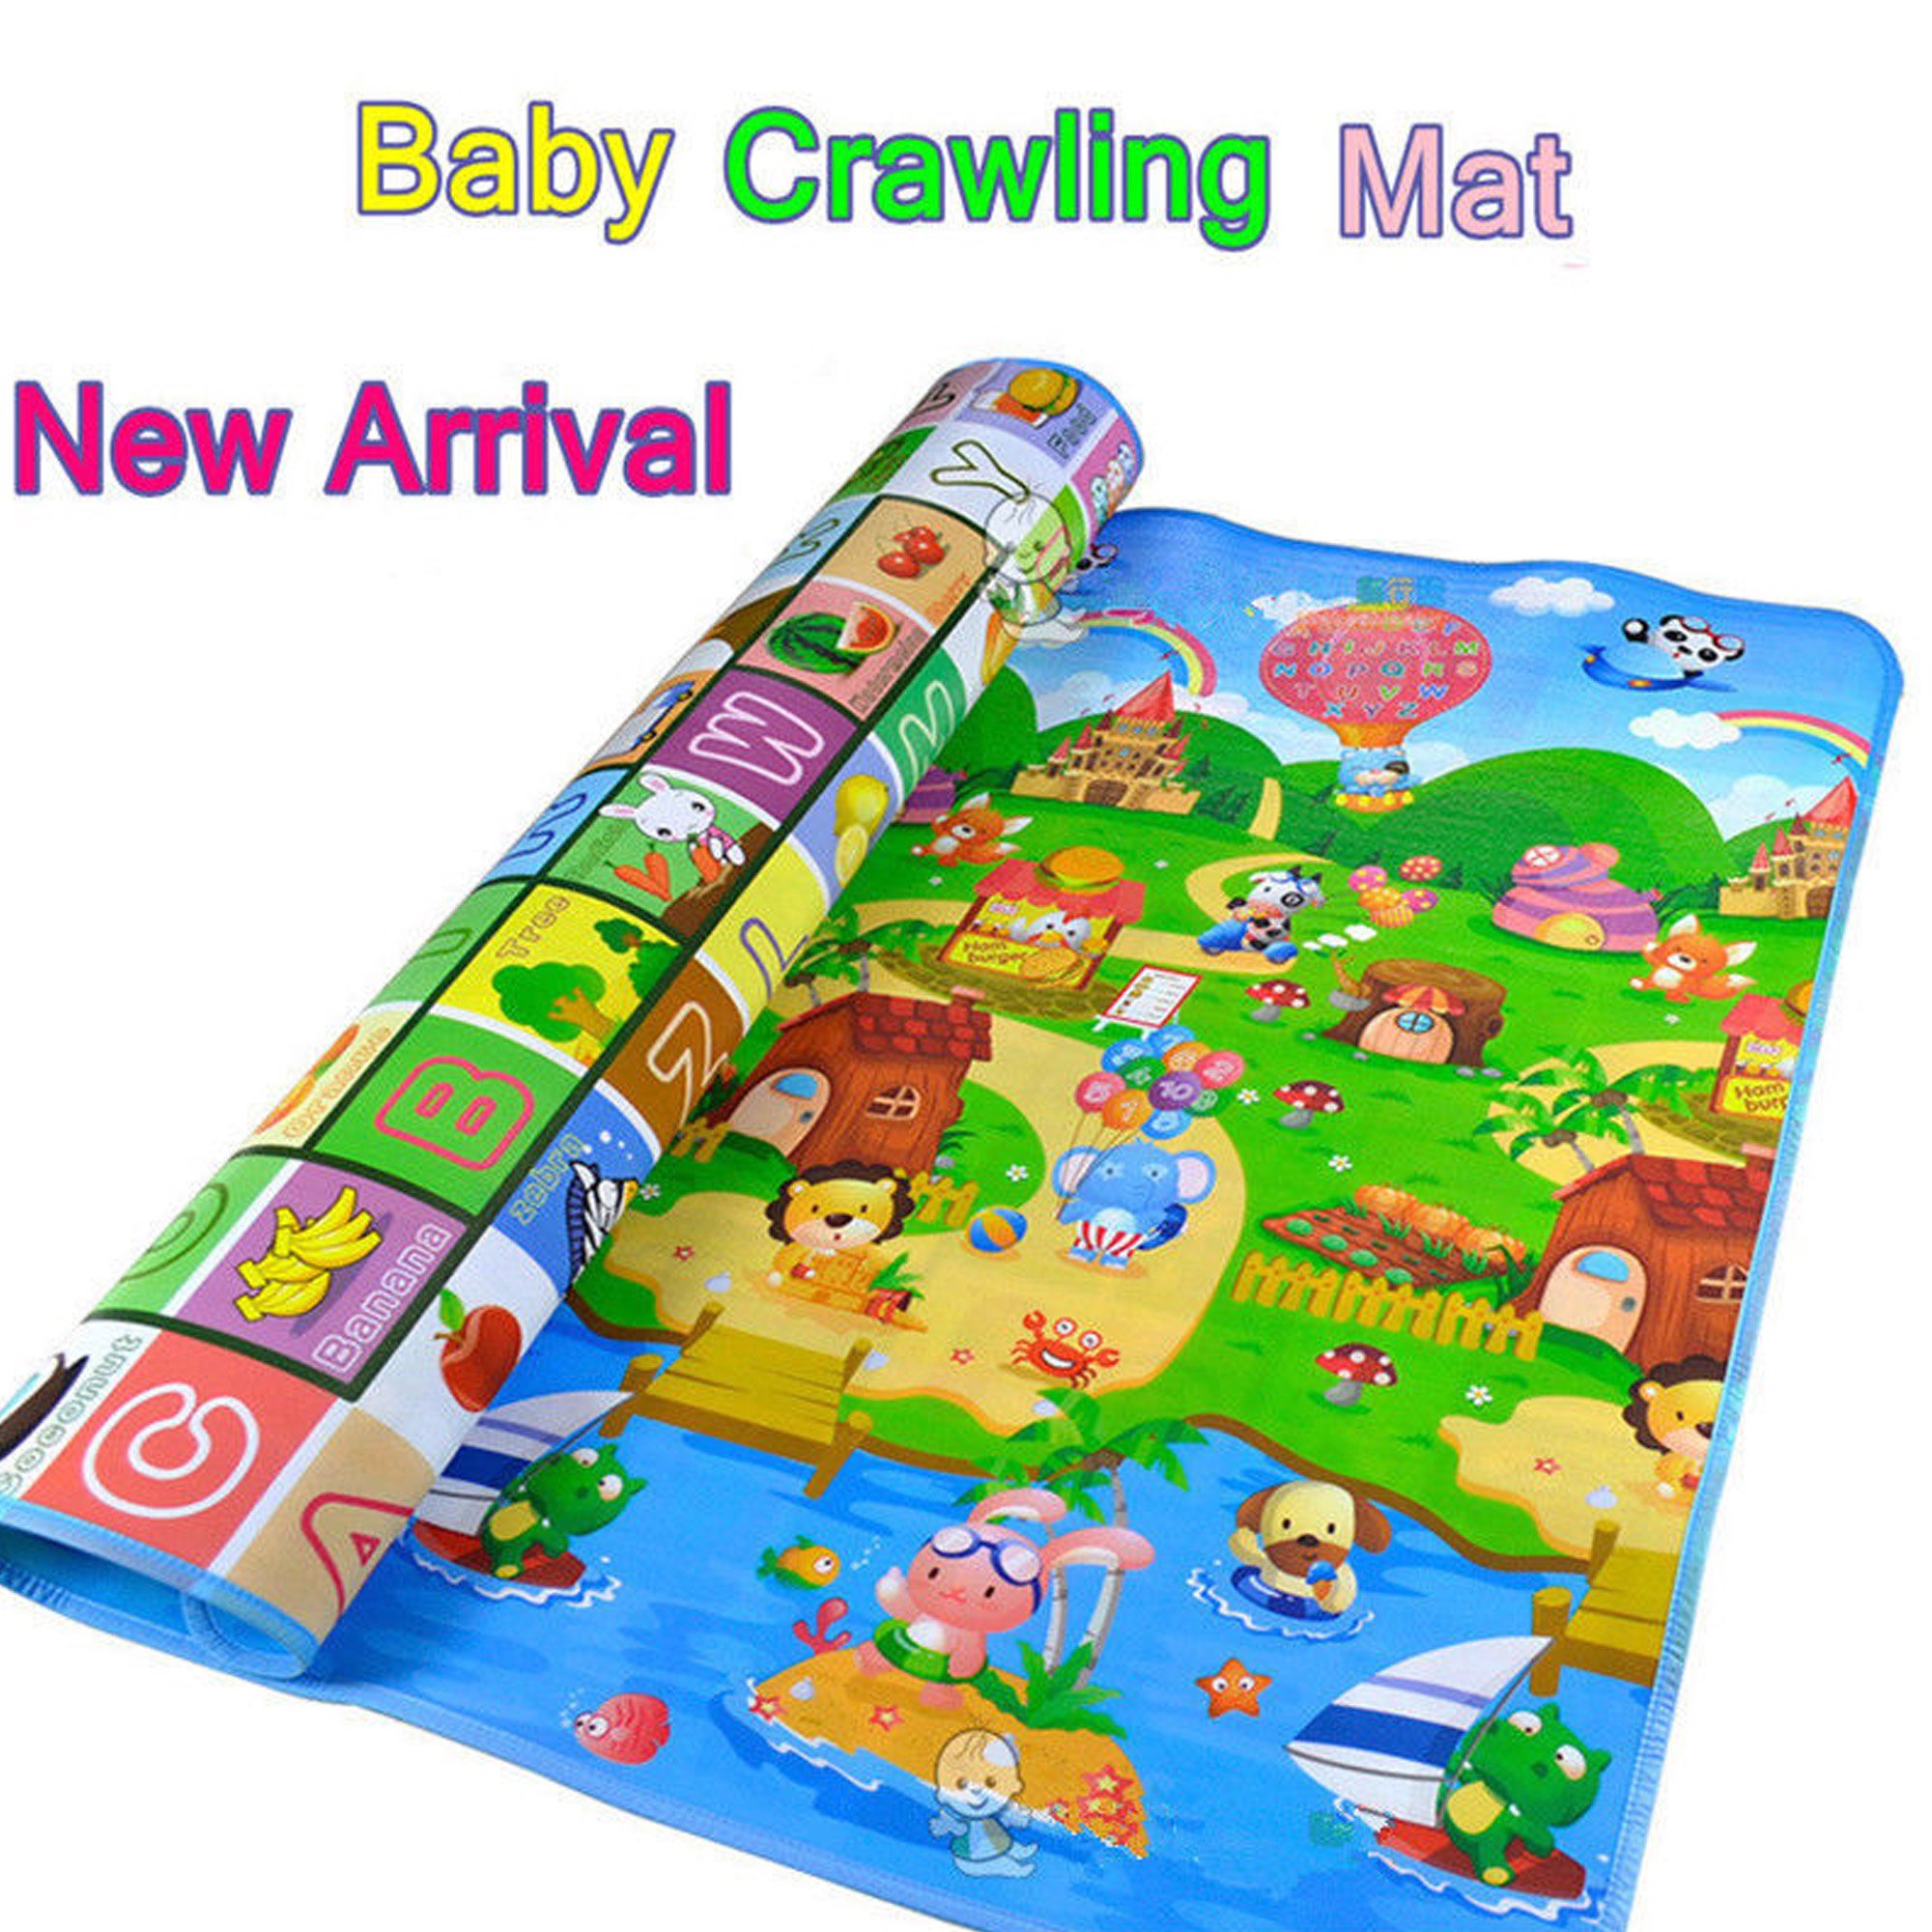 Musuos Baby Crawling Play Mat Kids Children Toddlers Floor Game PlayMat - image 5 of 6